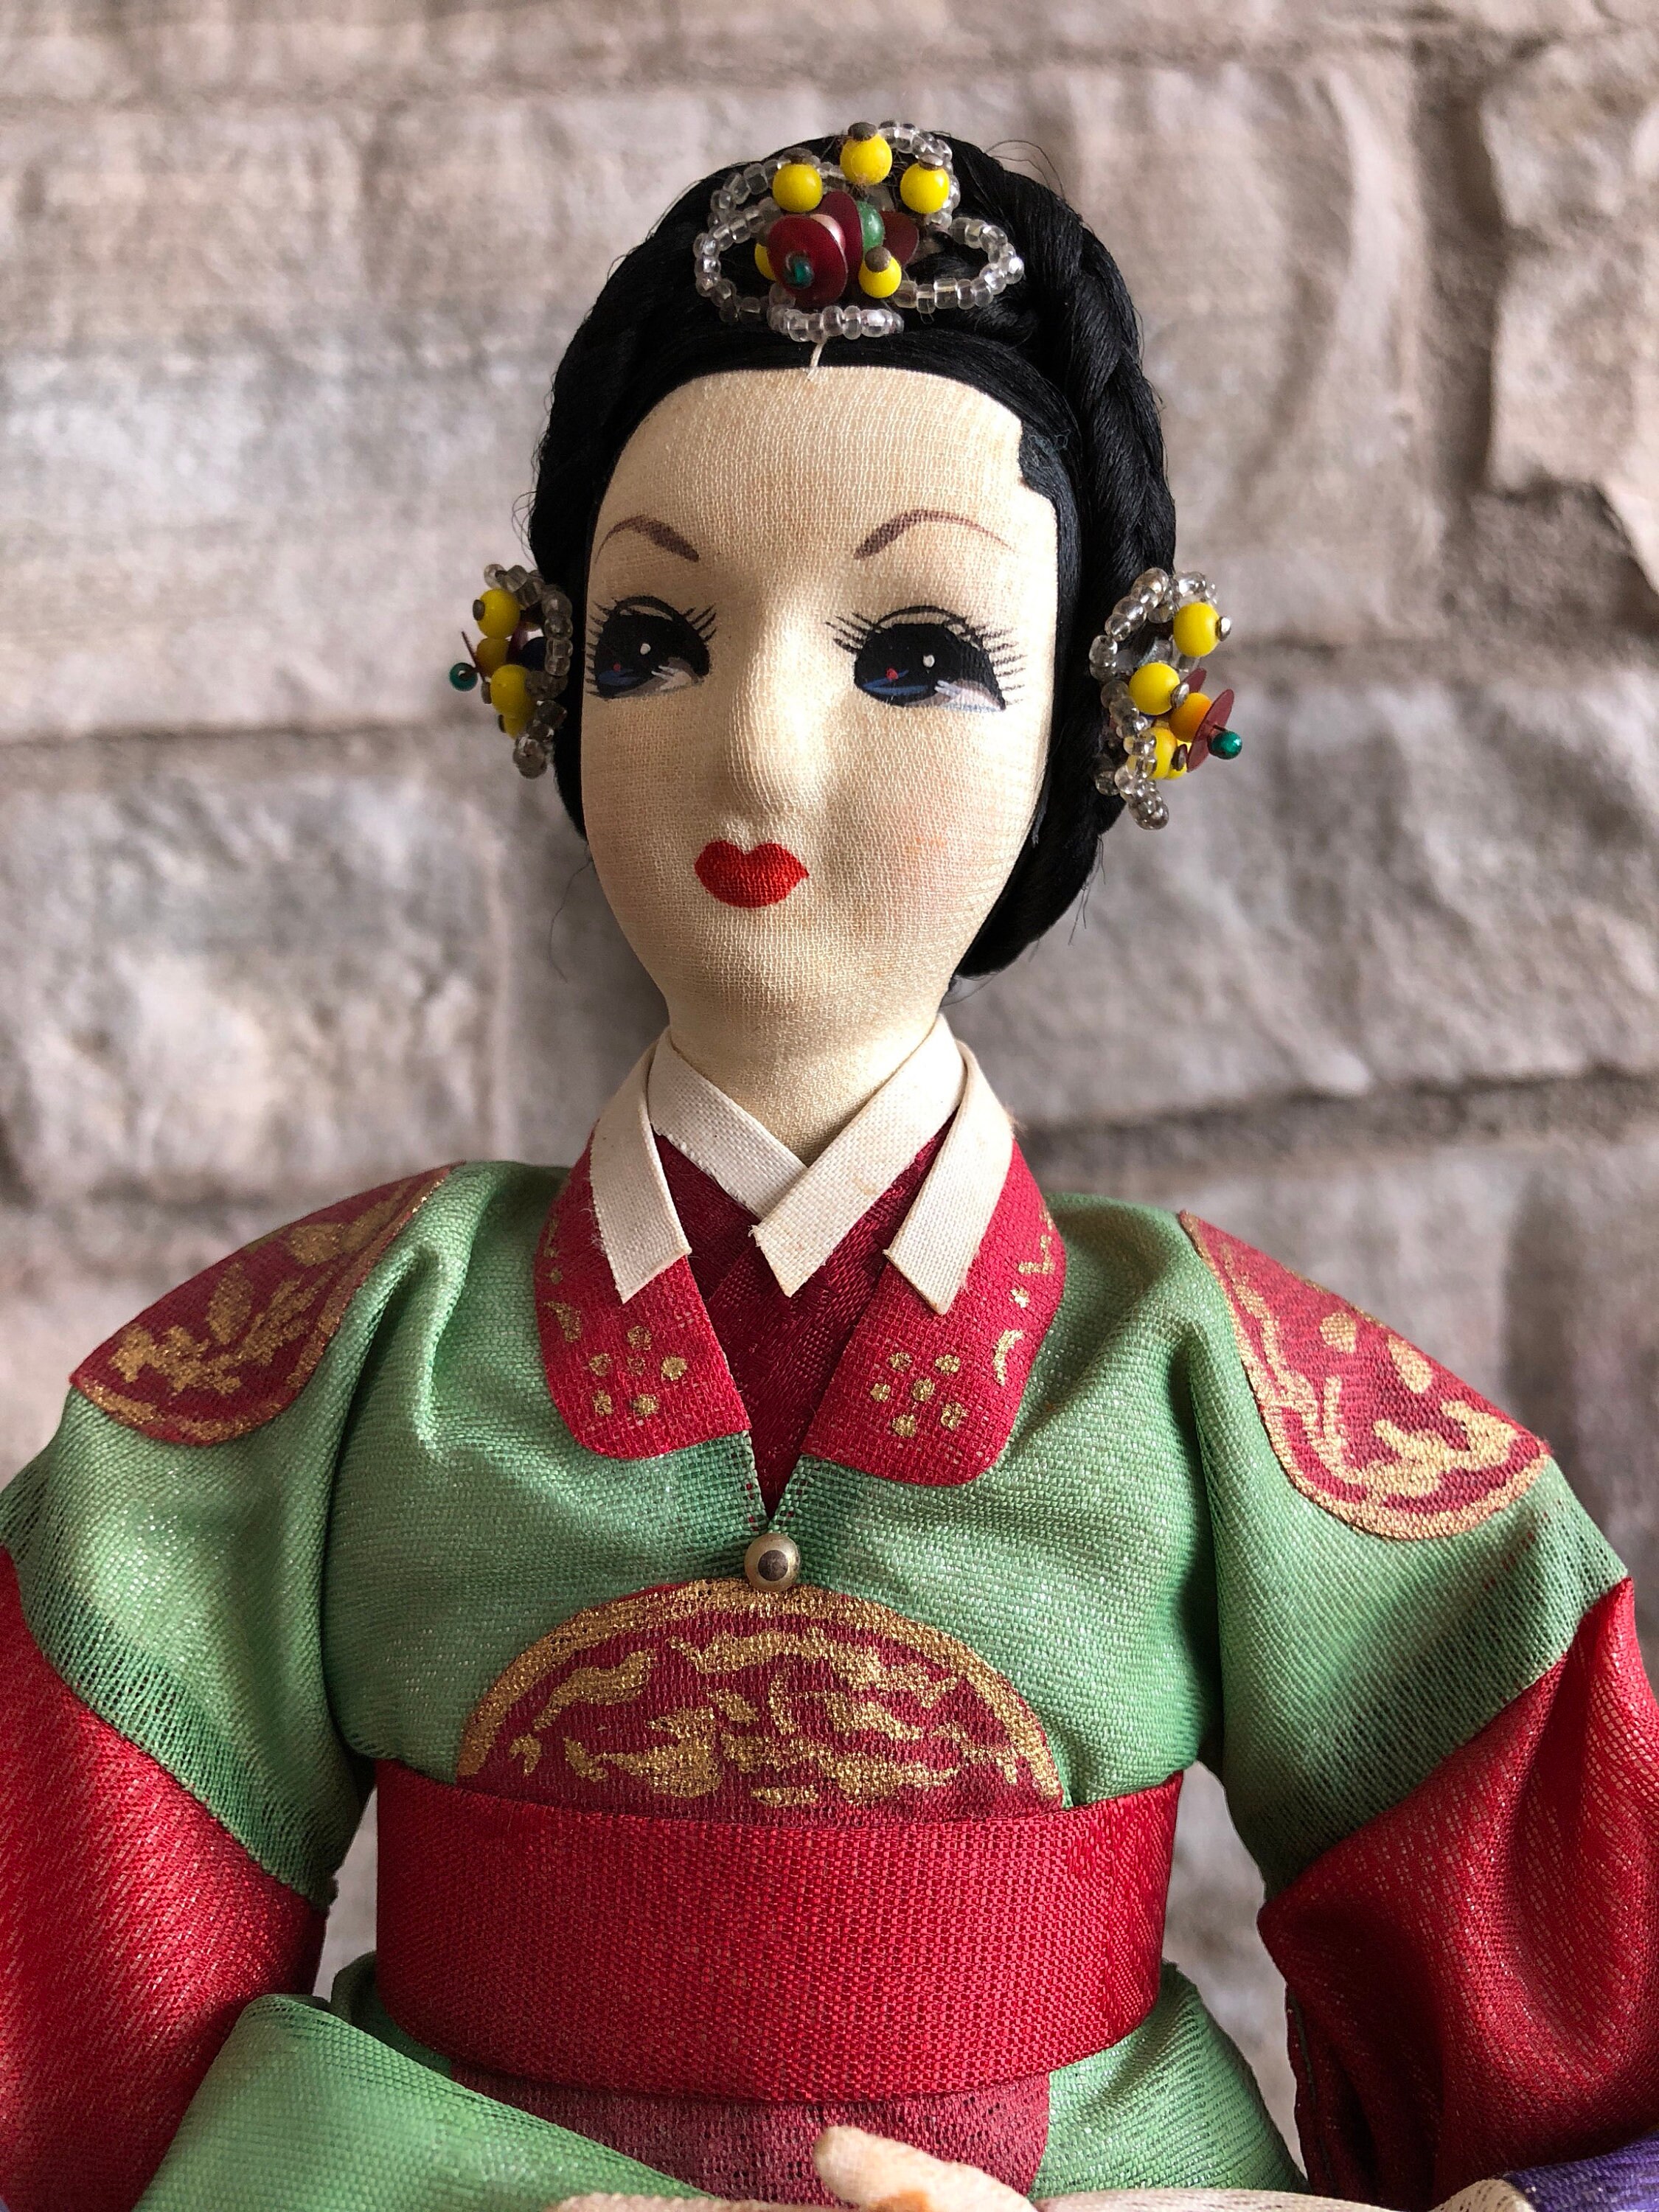 NUOLUX Korean Decor Geisha Kimono Japanese Homeasian Desktop Dolls  Figurines Hanbokon Style Figurine Ancient Samurai Vintage 